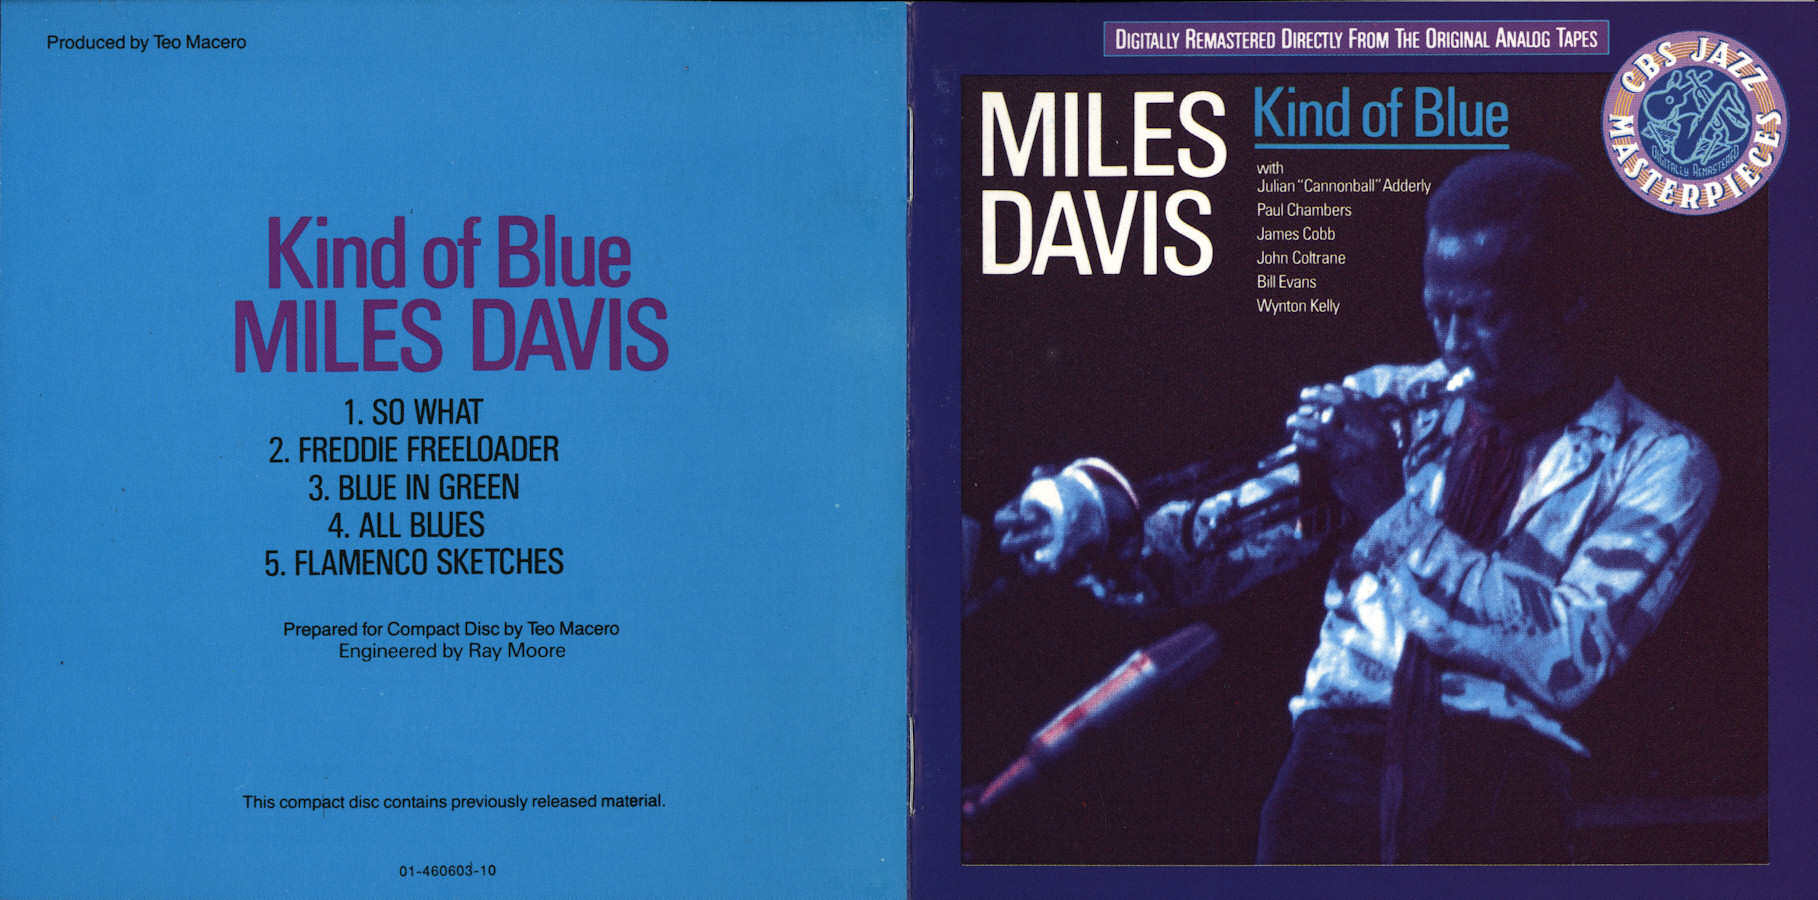 Miles davis blue miles. Kind of Blue" (1959, Columbia) Miles Davis. Kind of Blue Майлз Дэвис. Miles Davis - kind of Blue. Kind of Blue Майлз Дэвис джазовые альбомы.